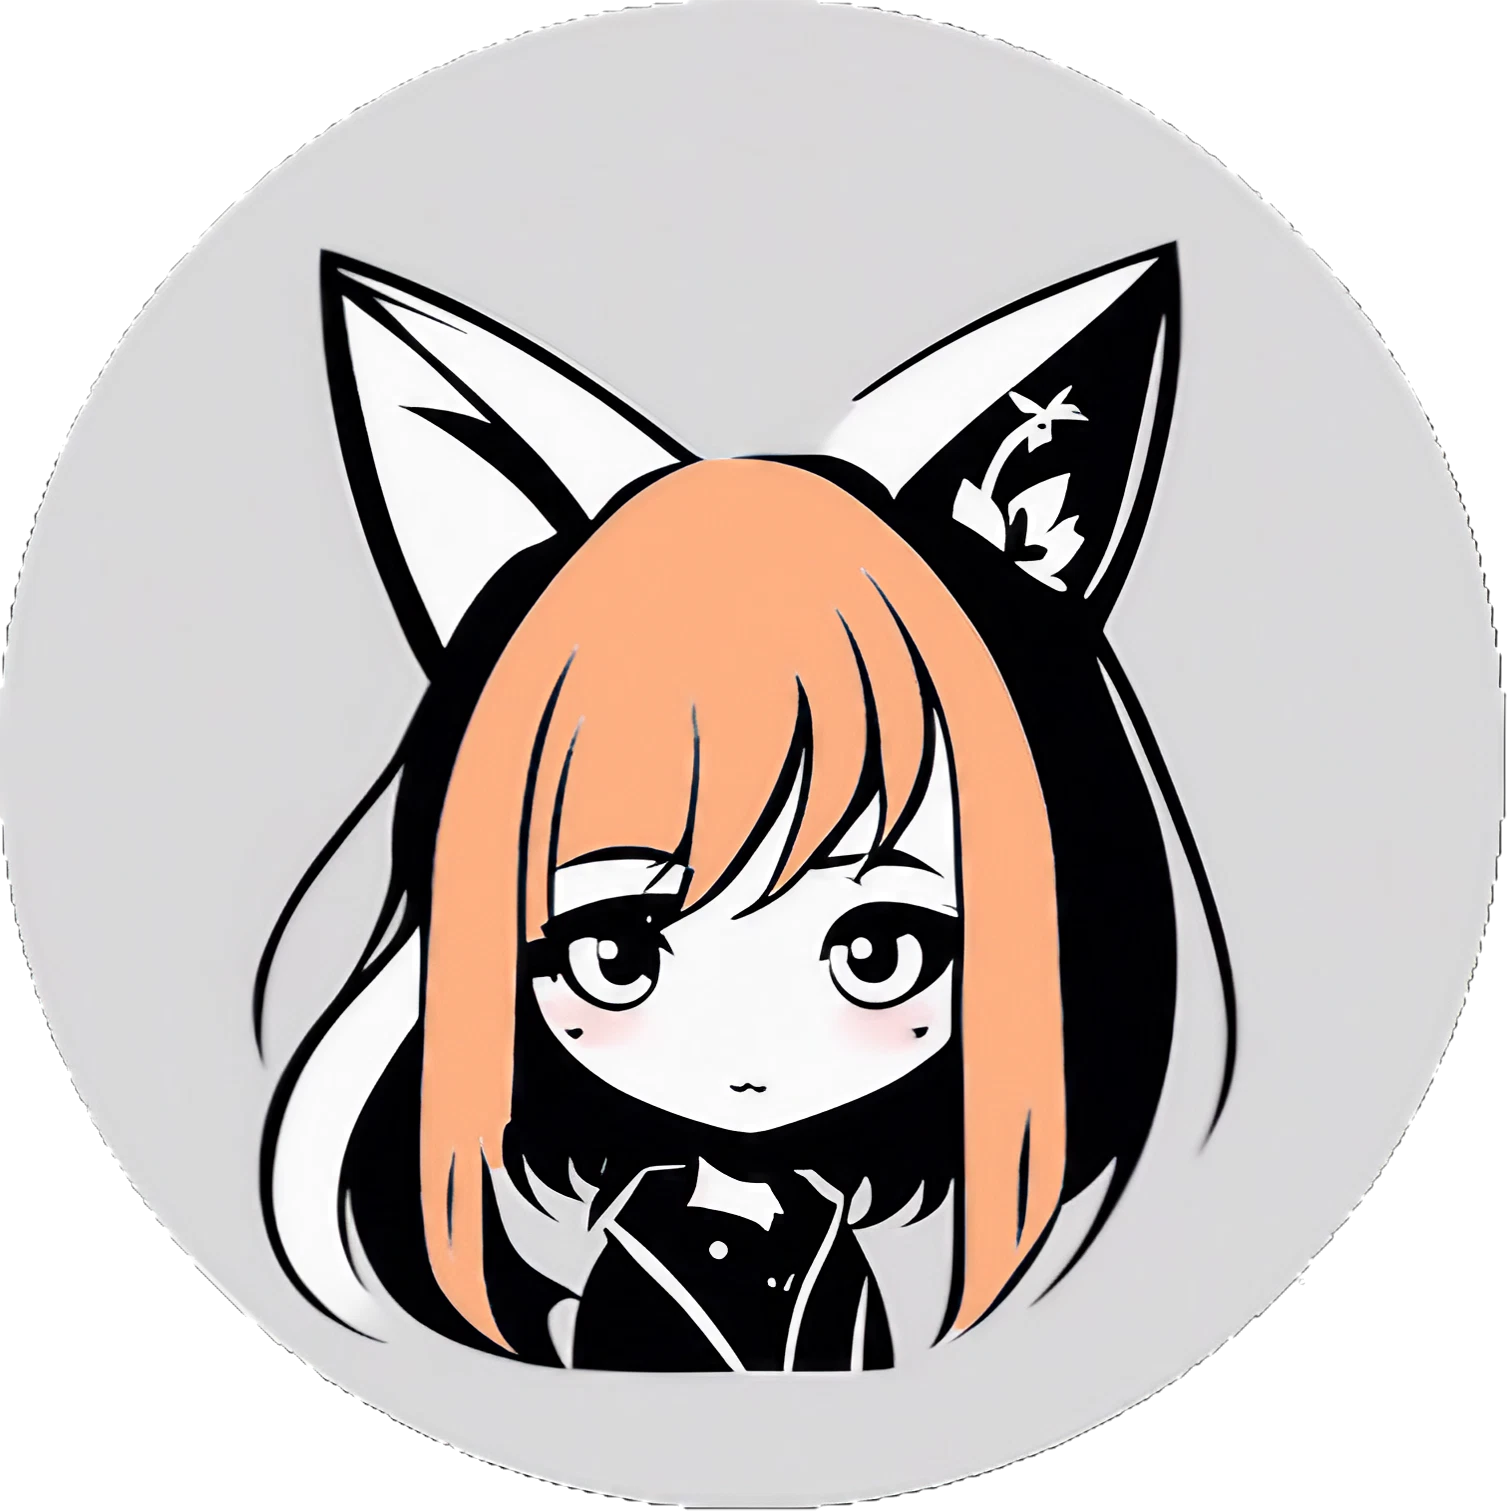 Süßes Kawaii Anime Fuchs-Mädchen - Sticker - 3x3cm